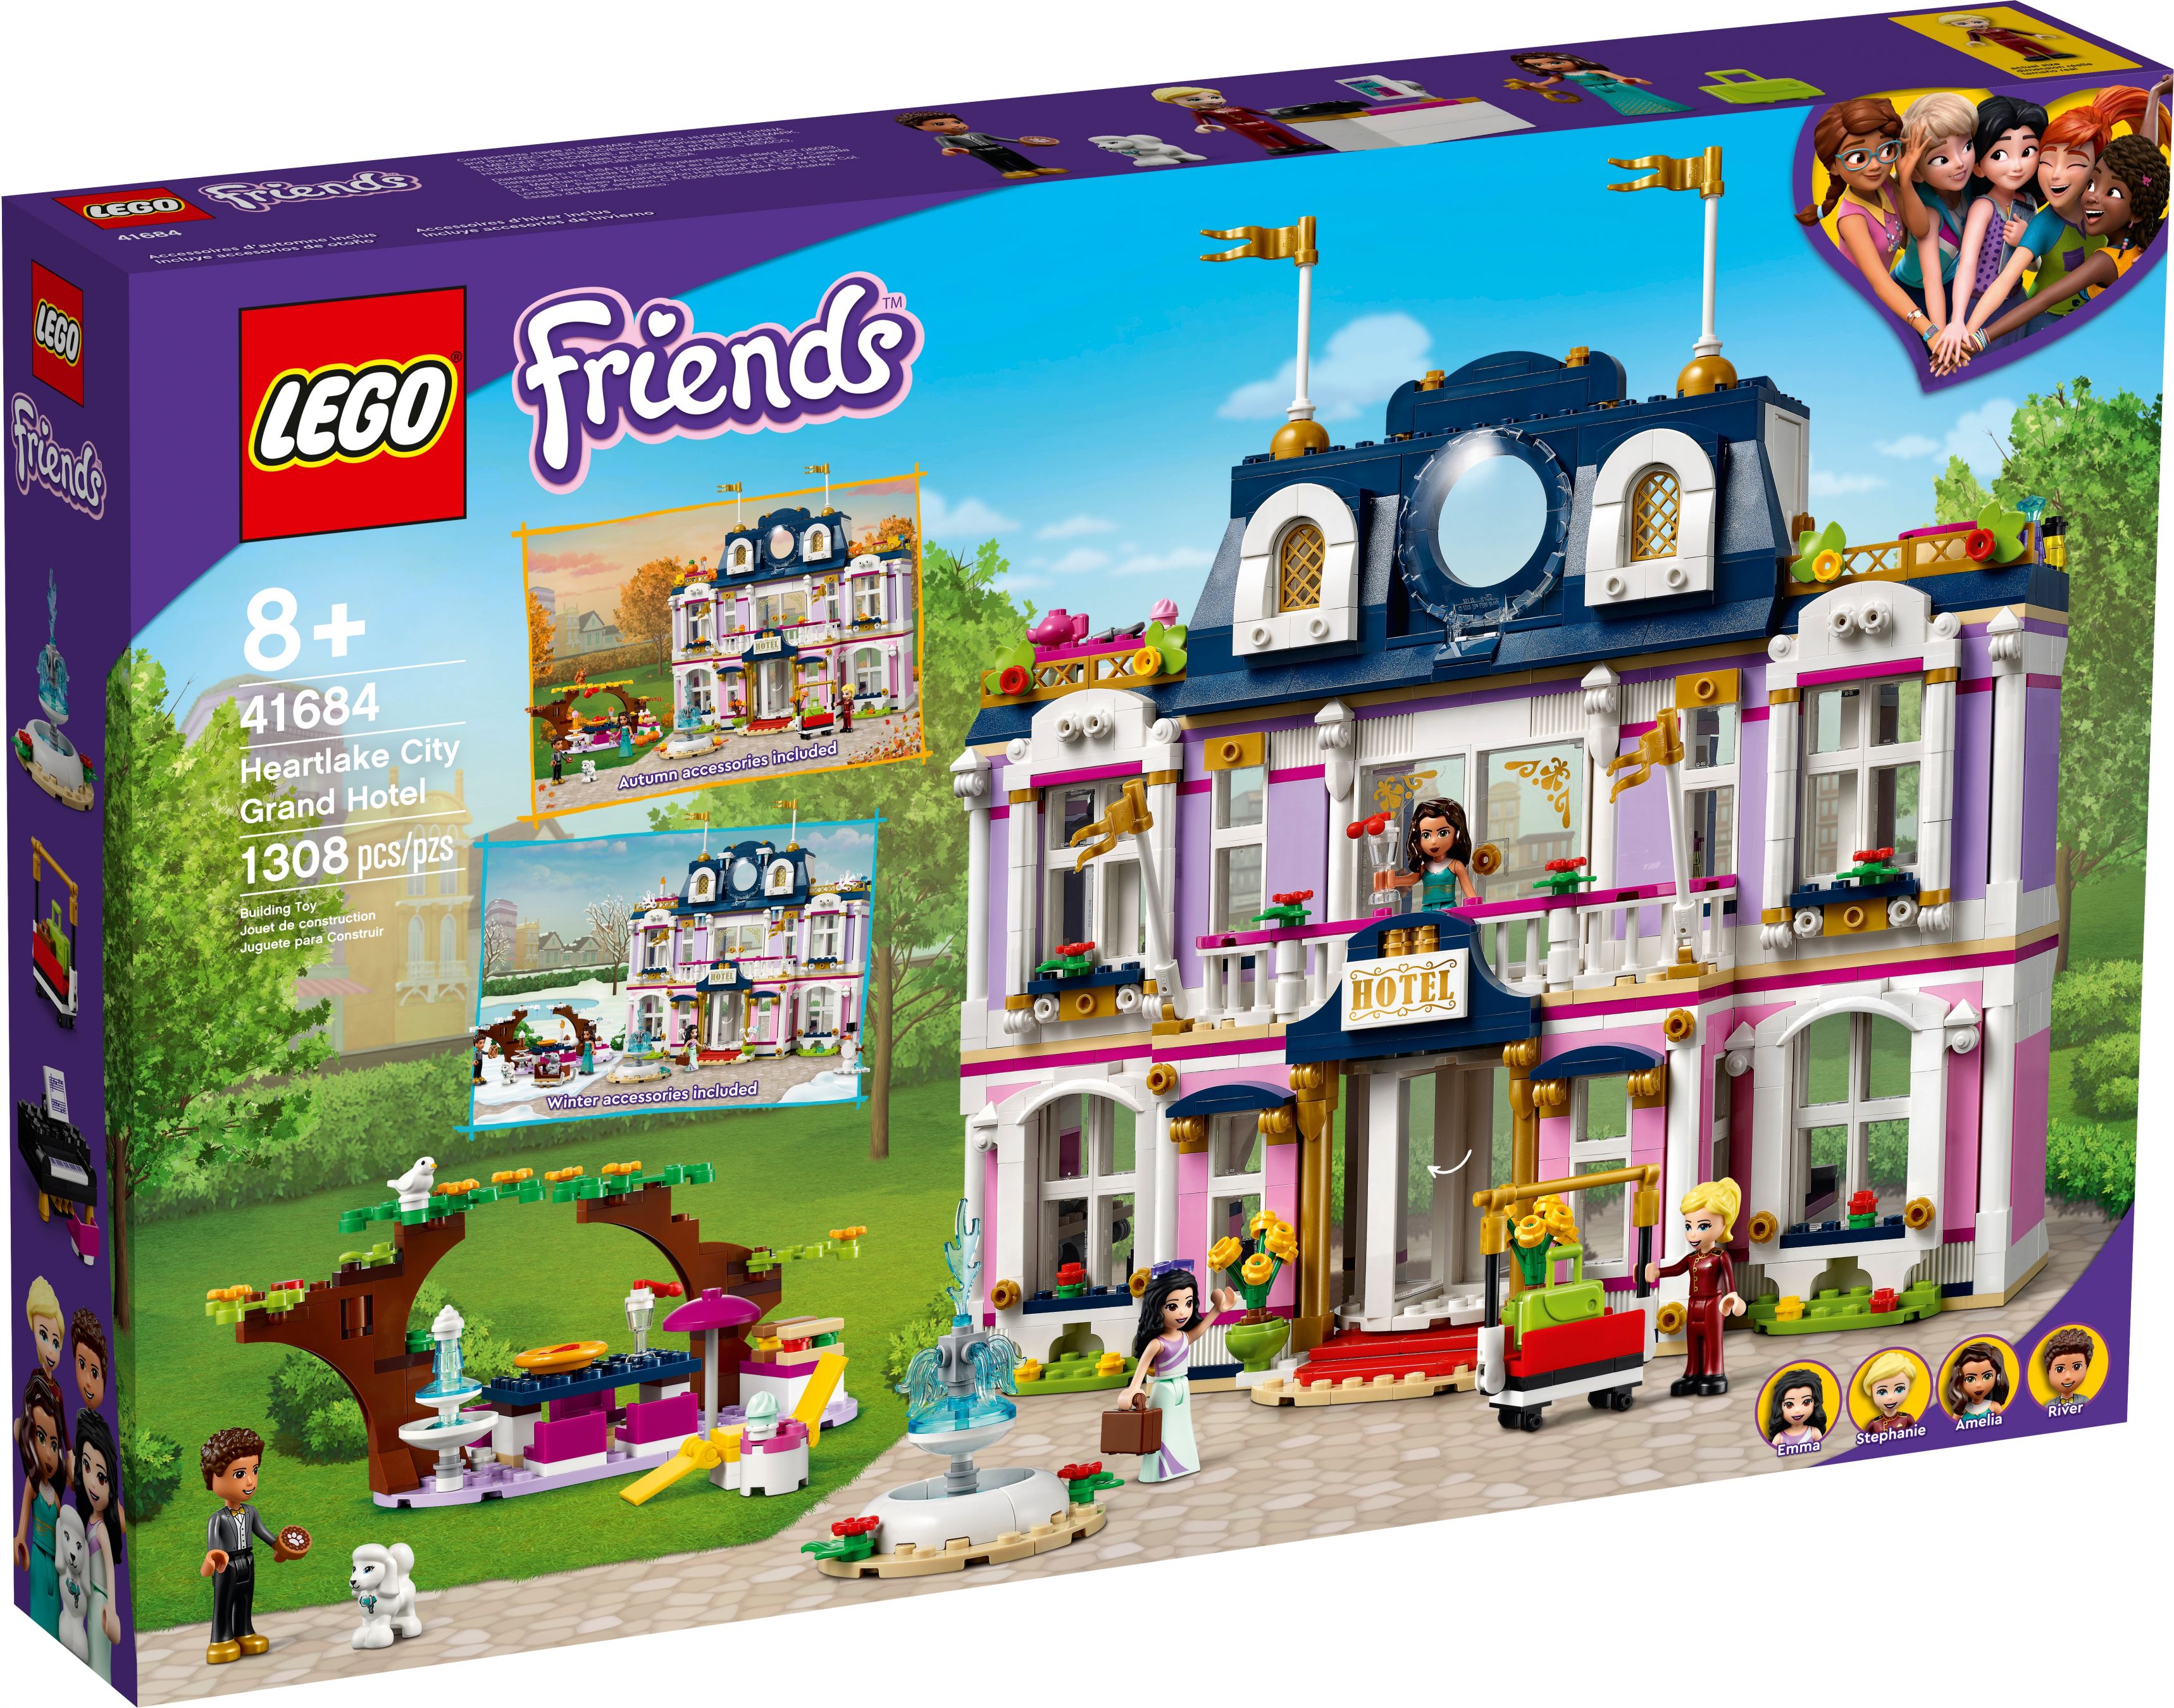 LEGO Friends 41684 Heartlake City Hotel LEGO_41684_alt1.jpg